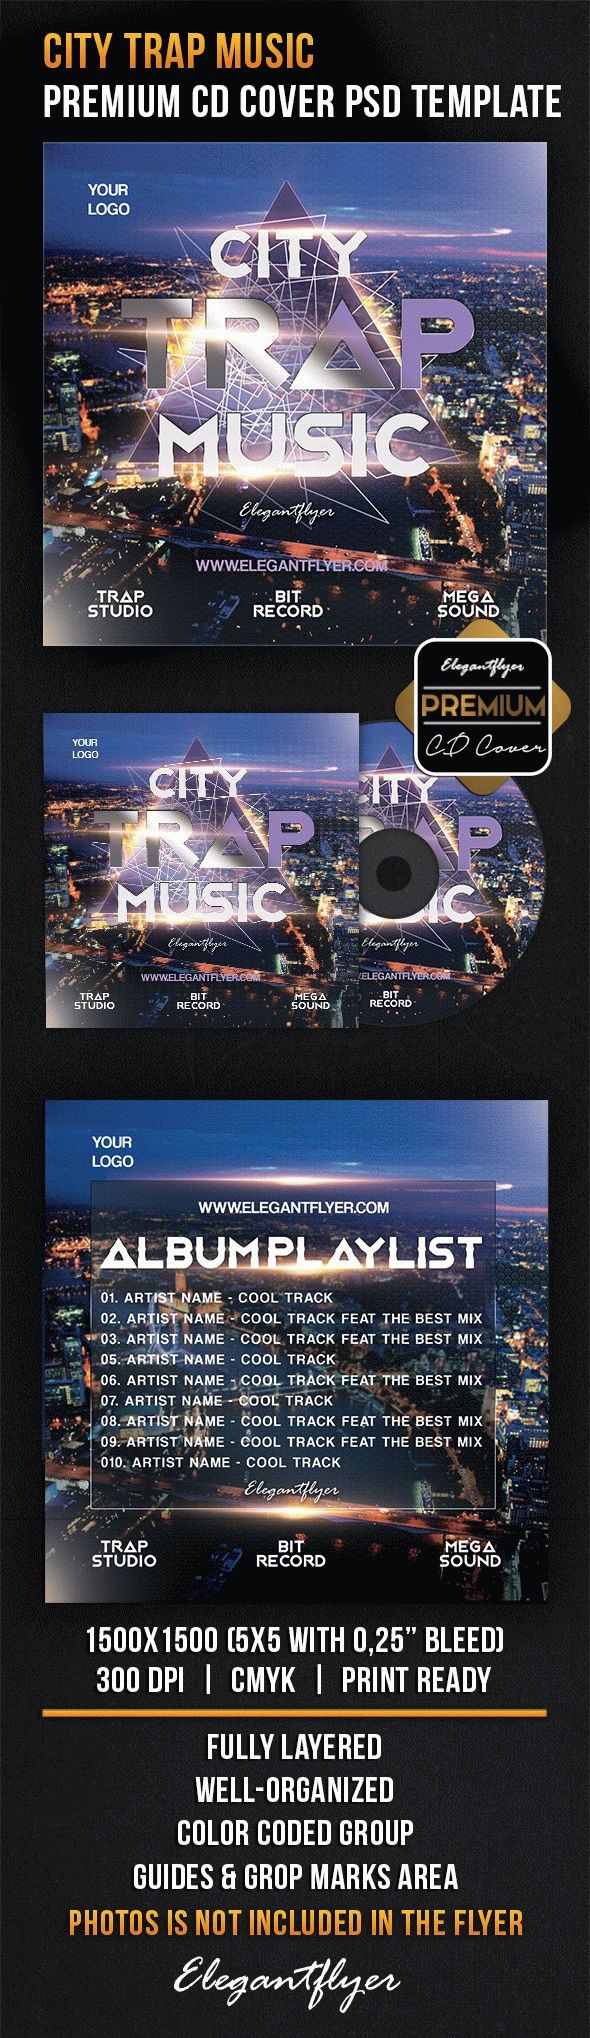 Muzyka City Trap by ElegantFlyer